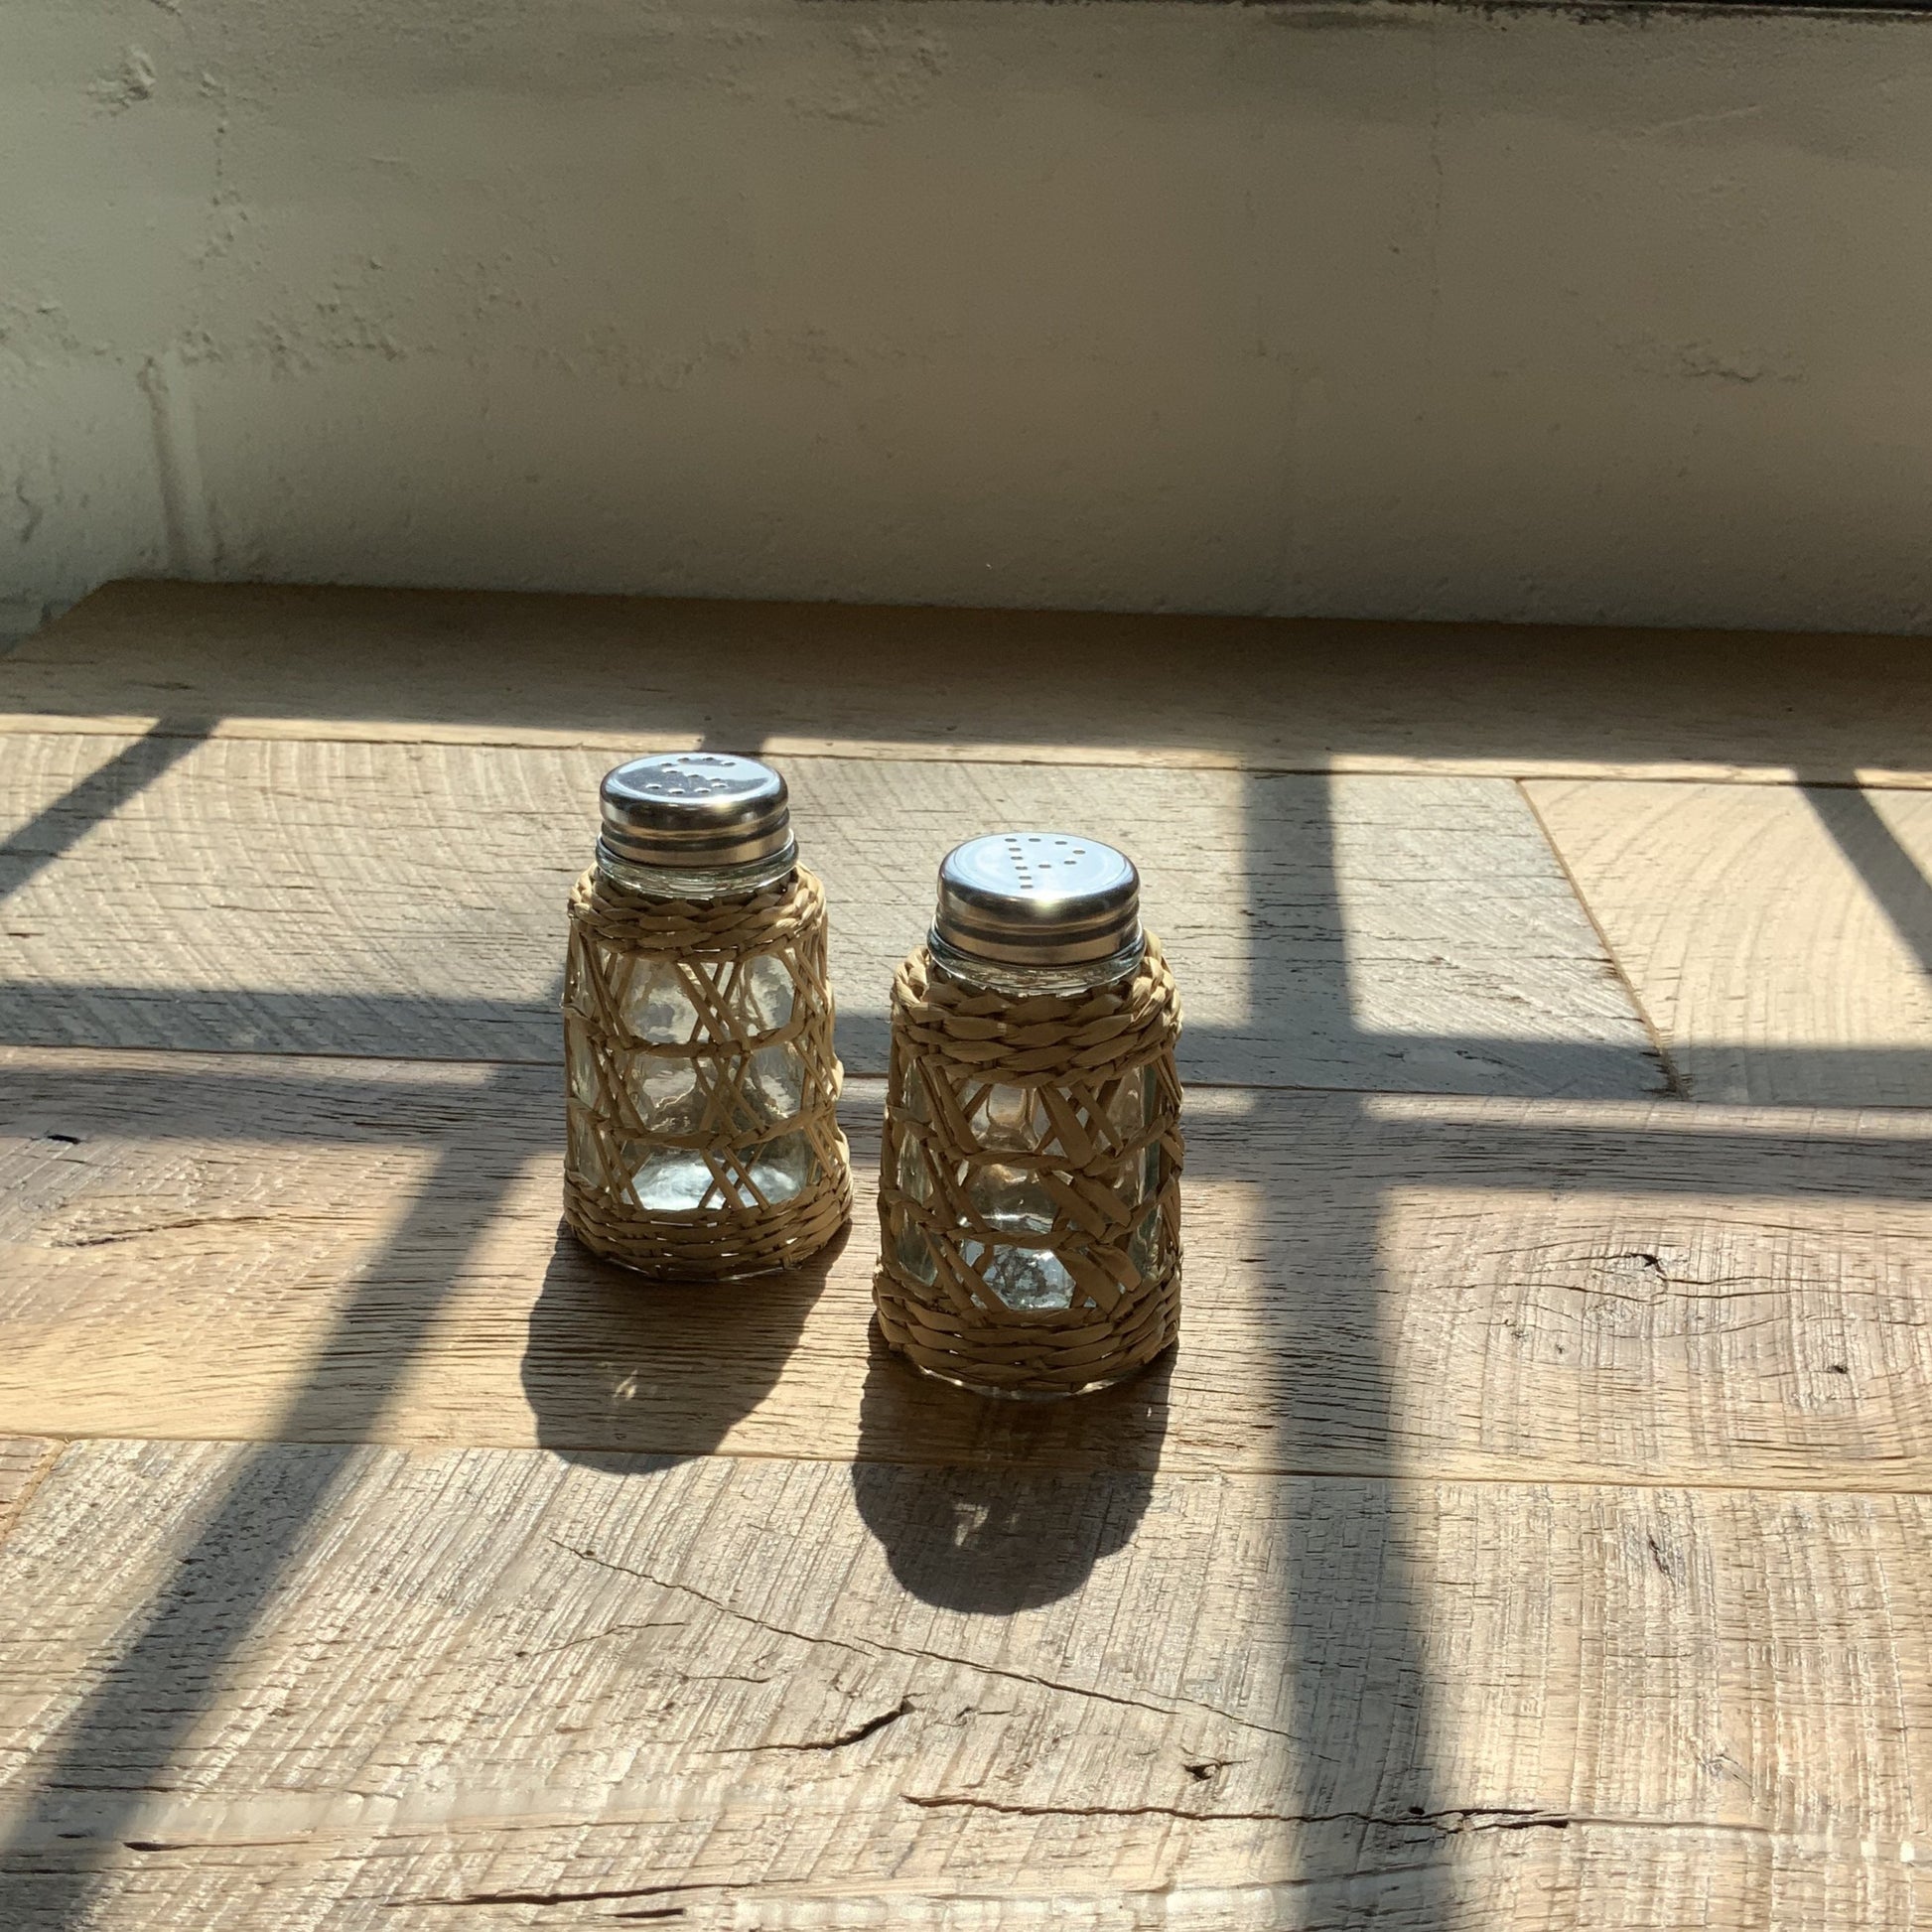 Seagrass Salt & Pepper Shaker (Set of 2)